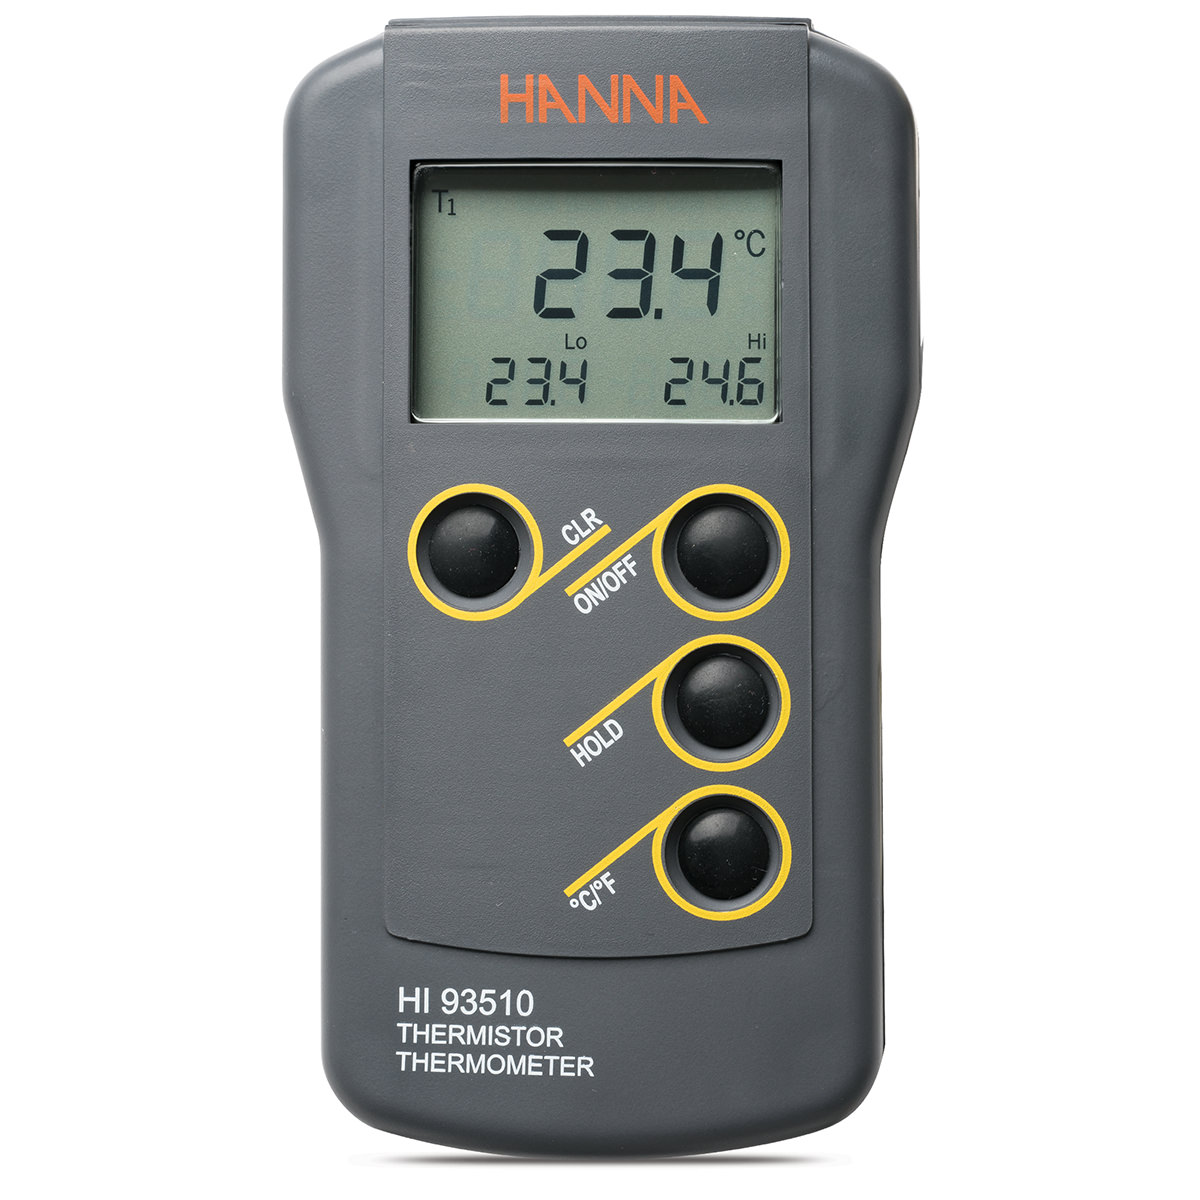 HI93510 Waterproof Thermistor Thermometer